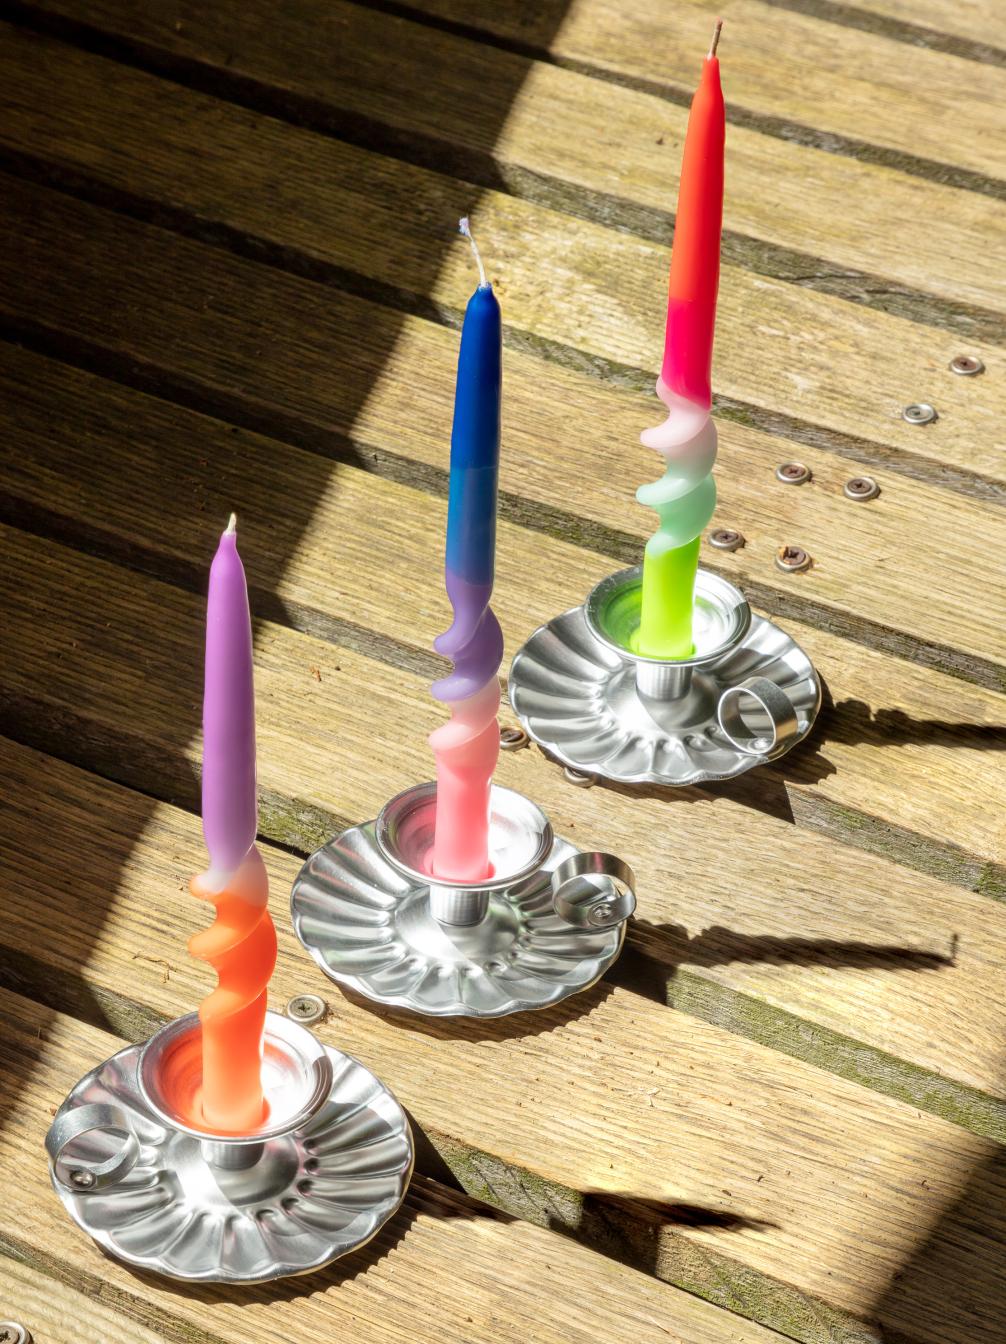 Box of 3 Swirl Dip Dye Candles